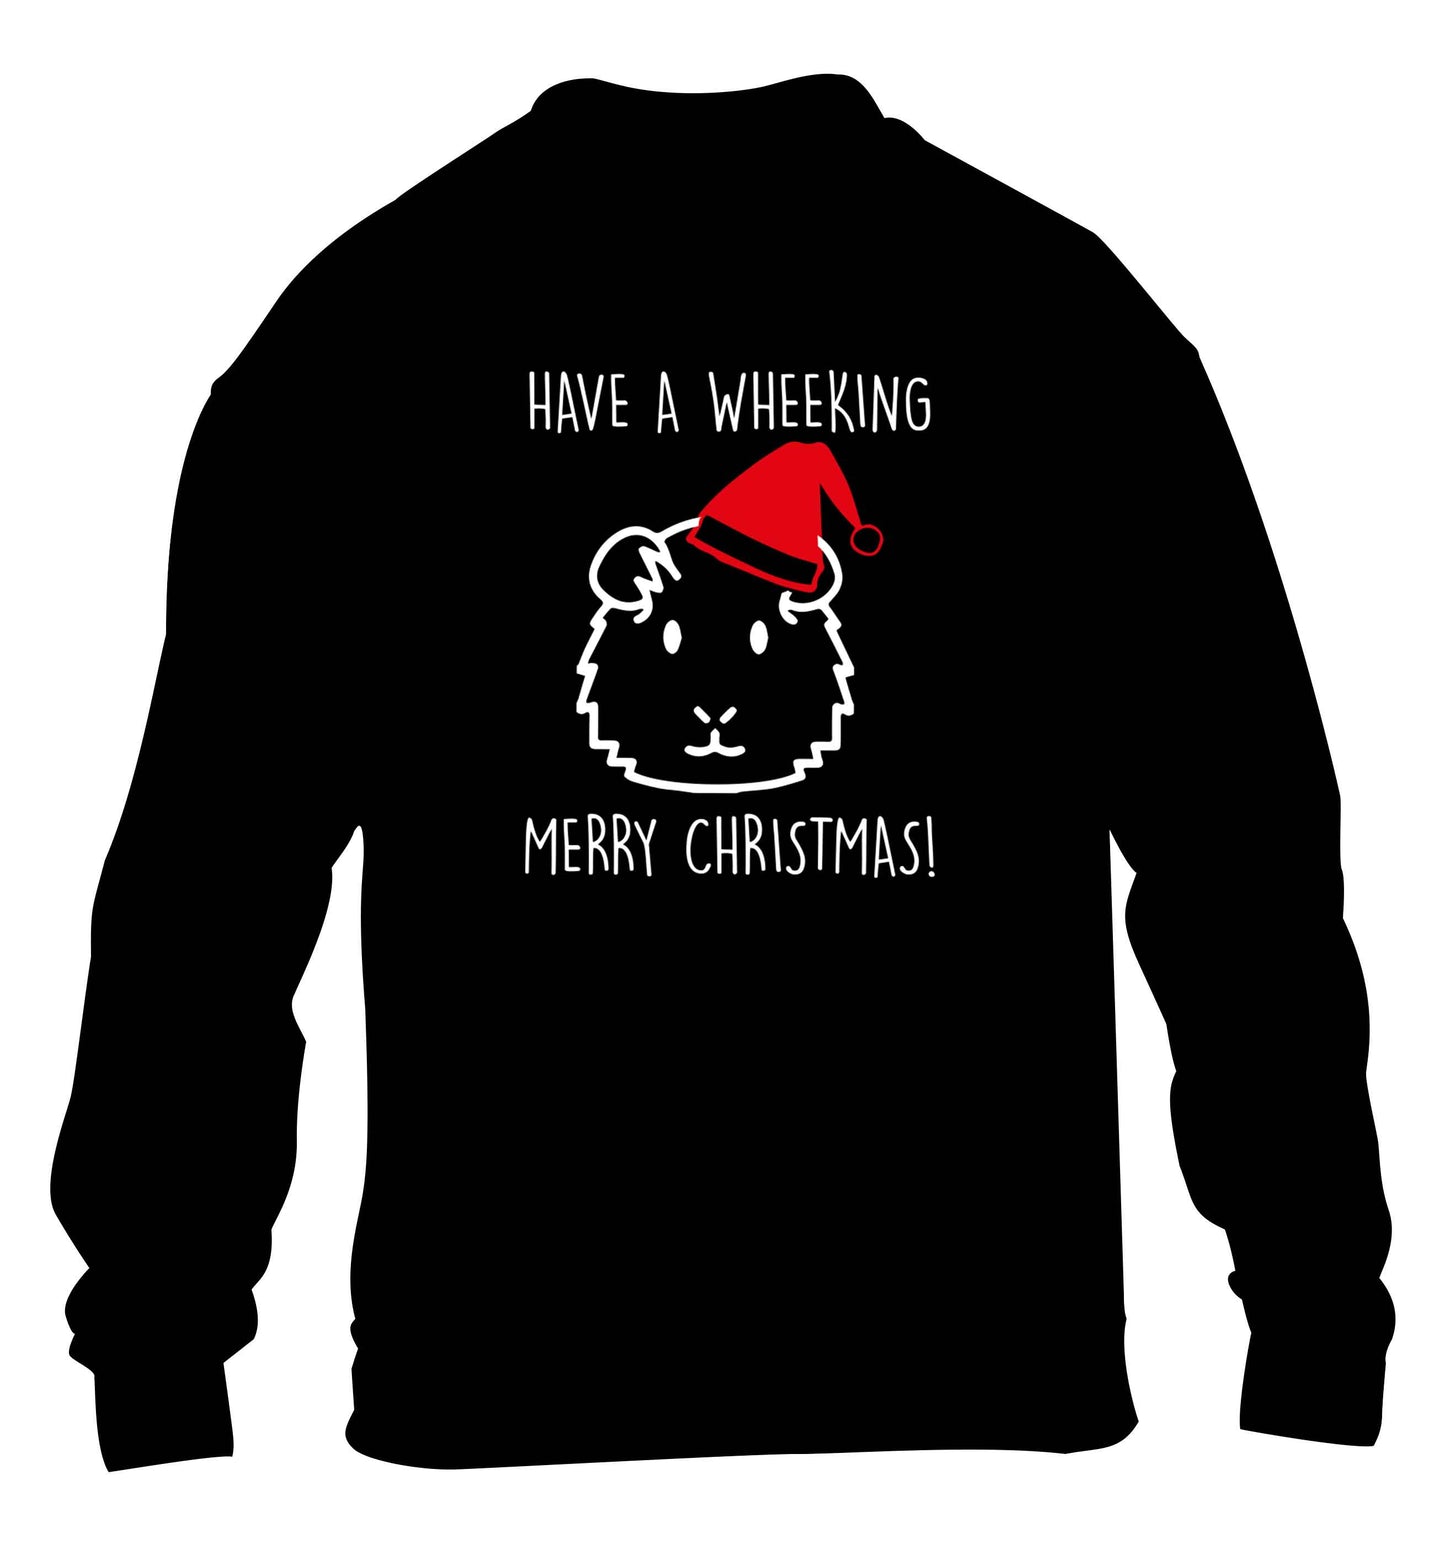 Have a wheeking merry Christmas children's black sweater 12-13 Years